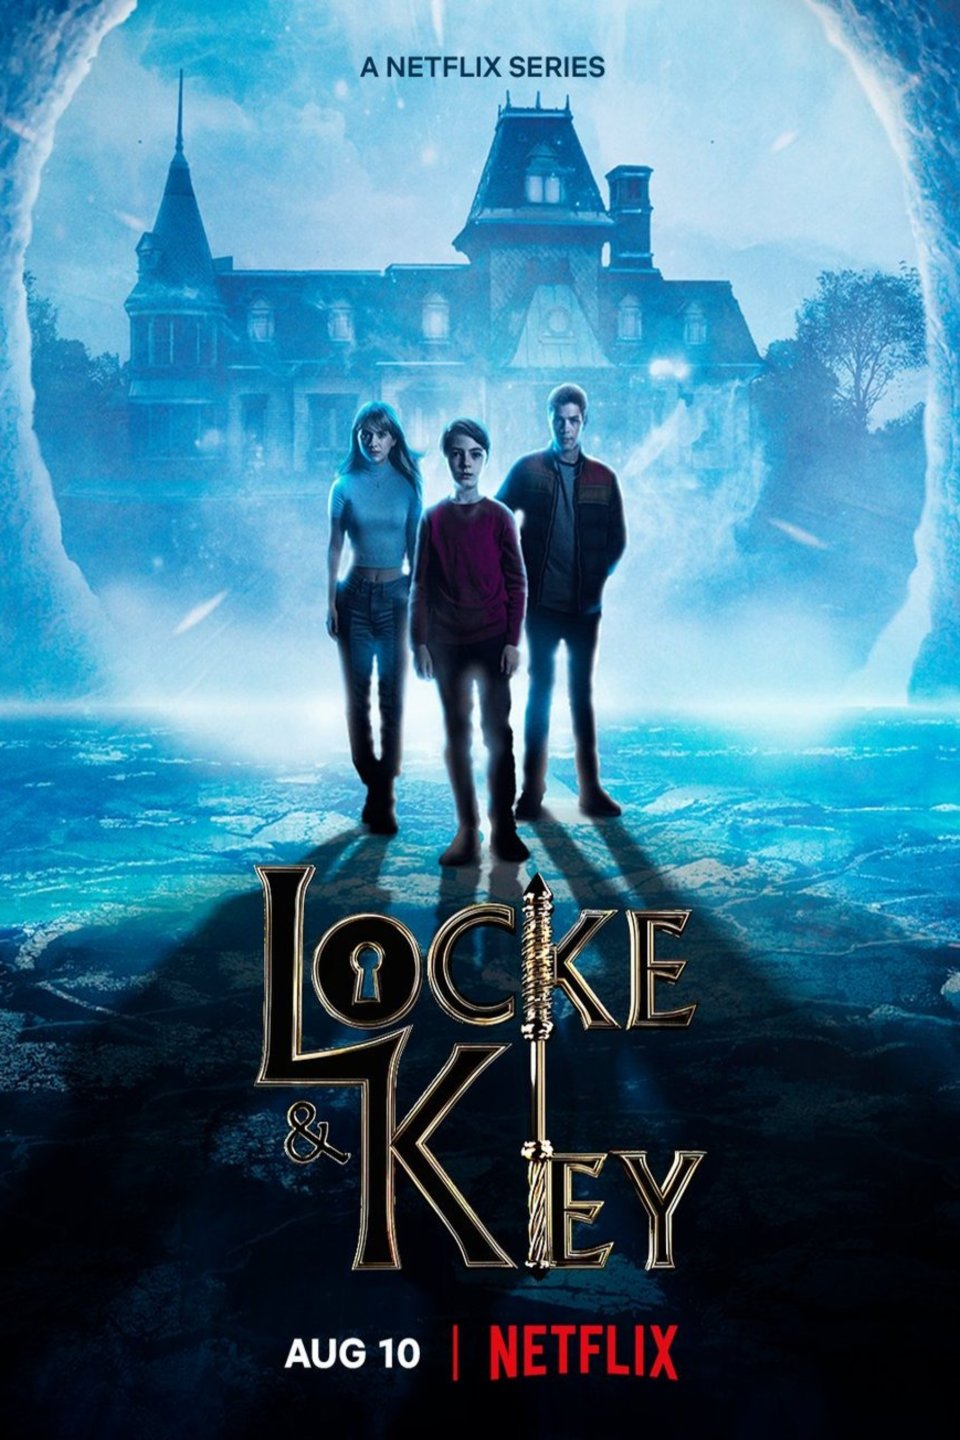 Poster of the movie Locke & Key